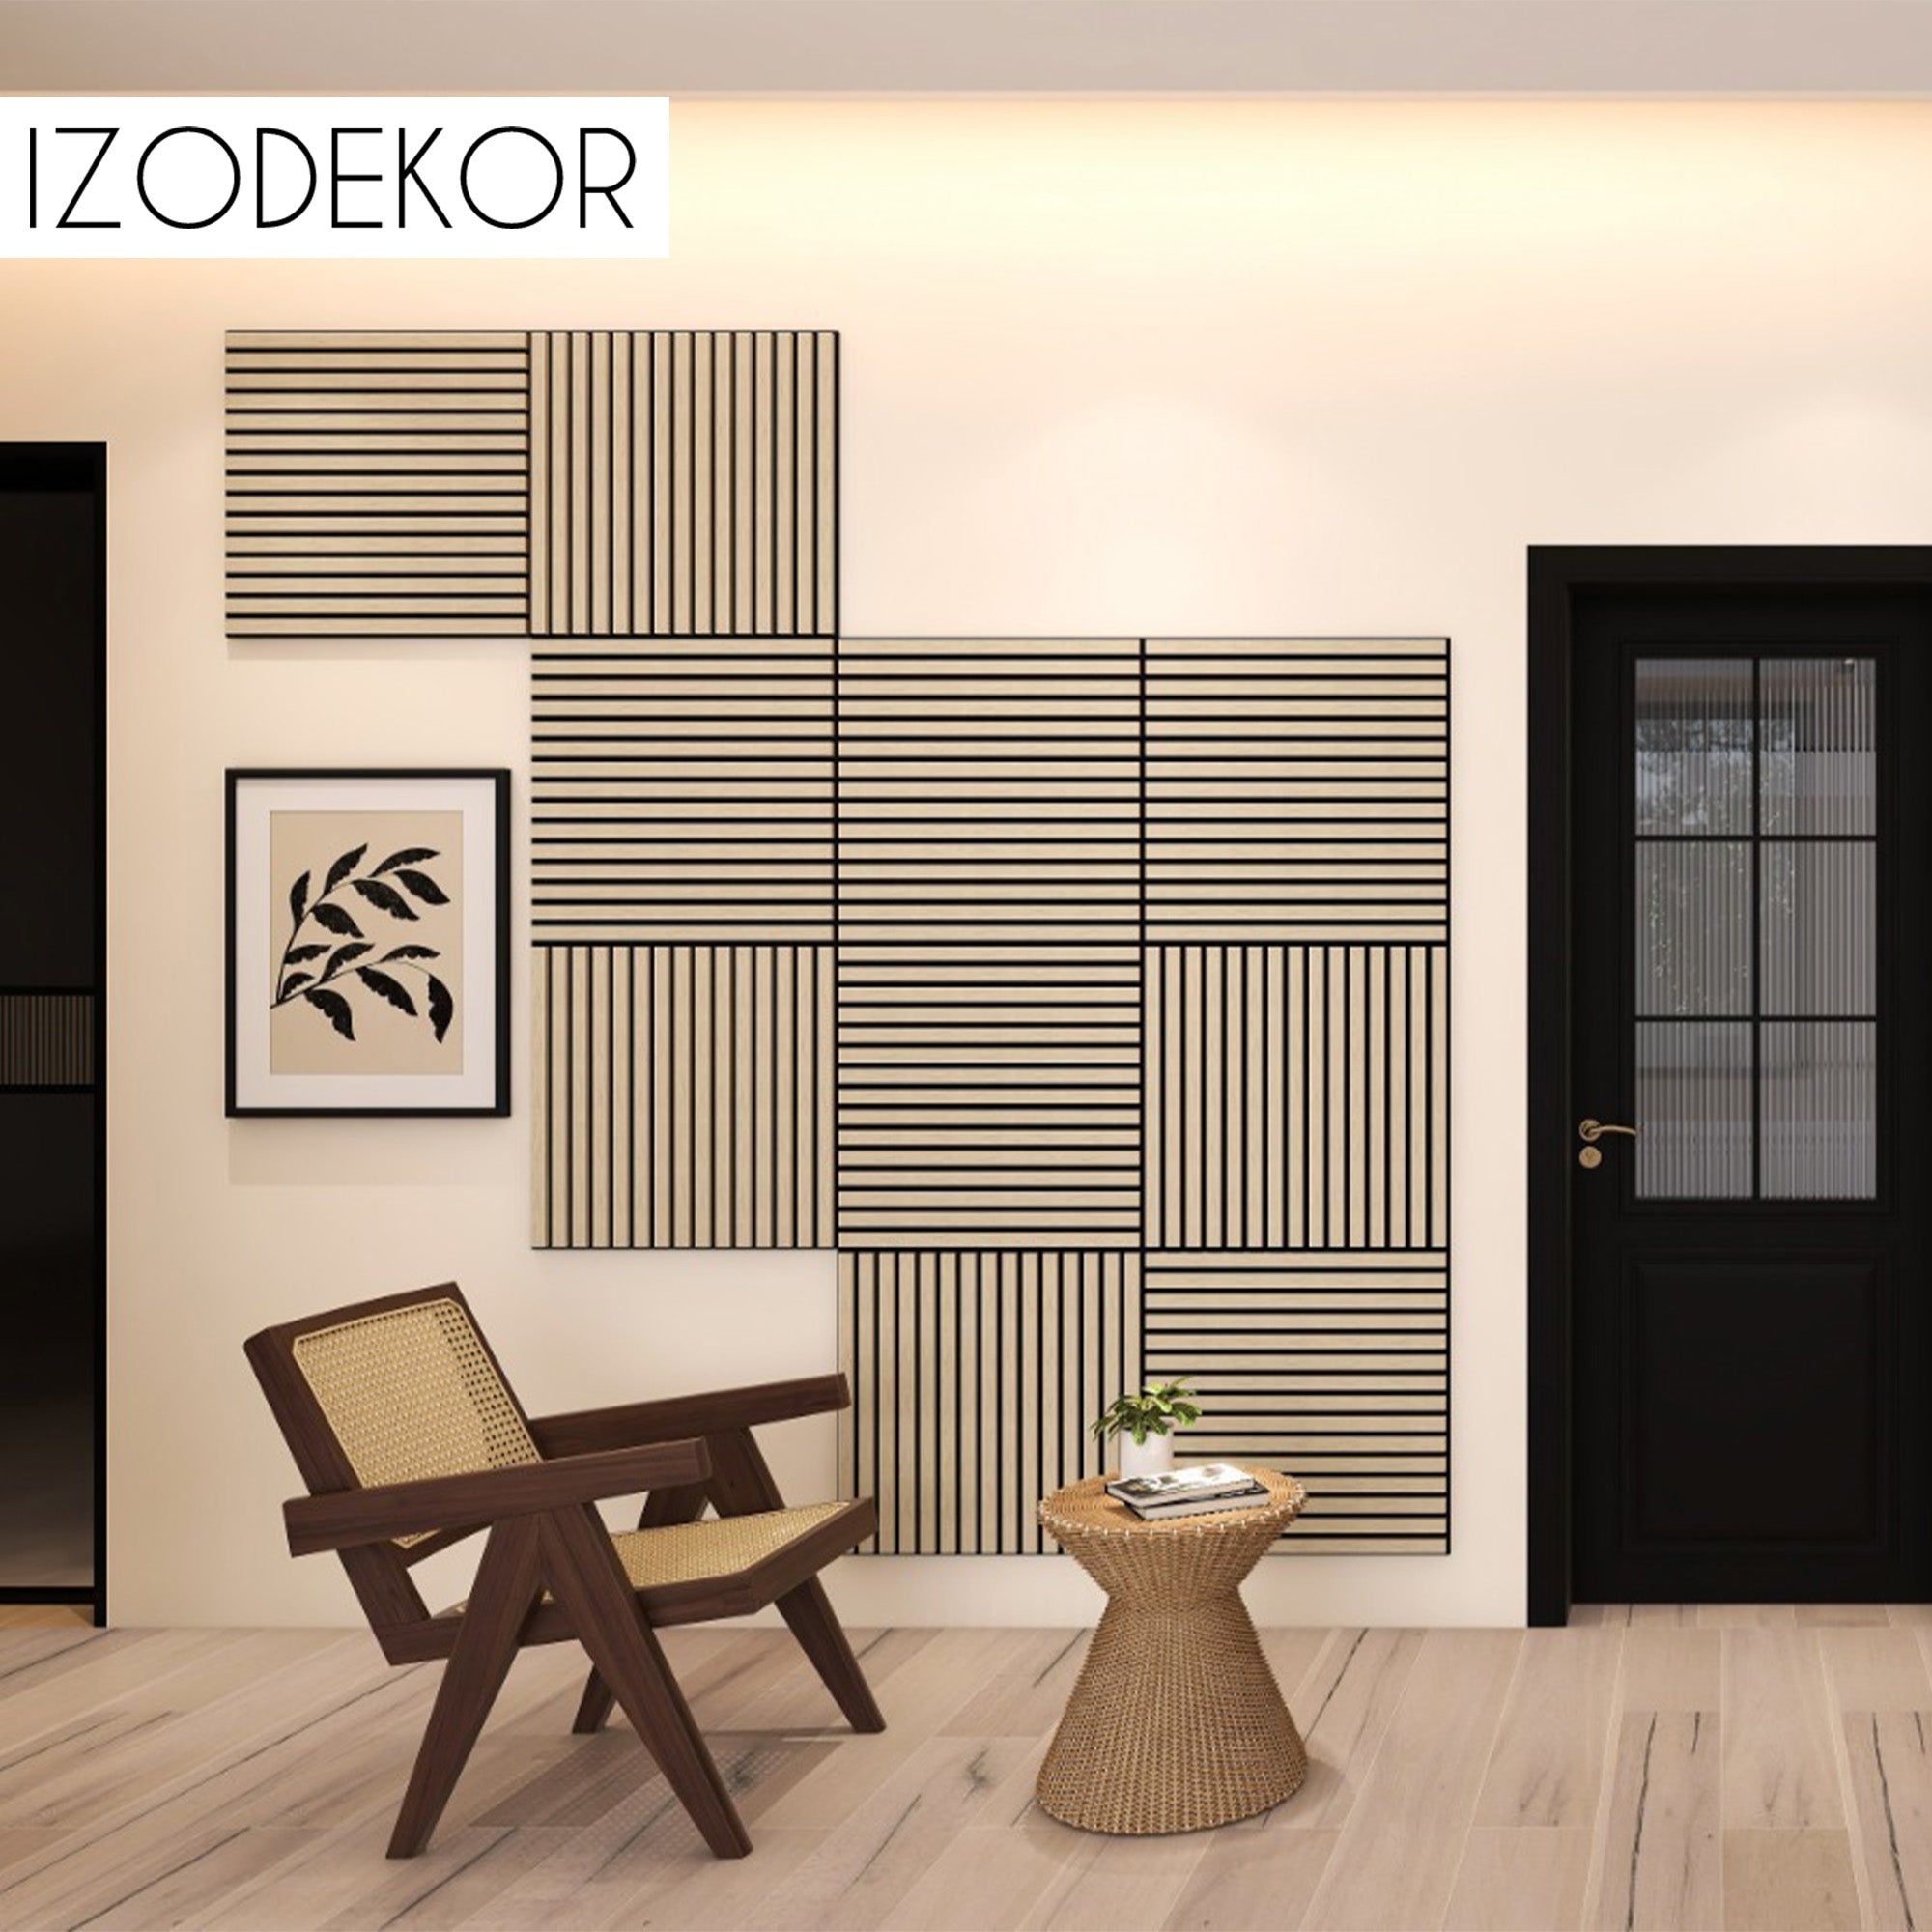 Izodekor Light Oak Acoustic Wood Panels 60x60cm